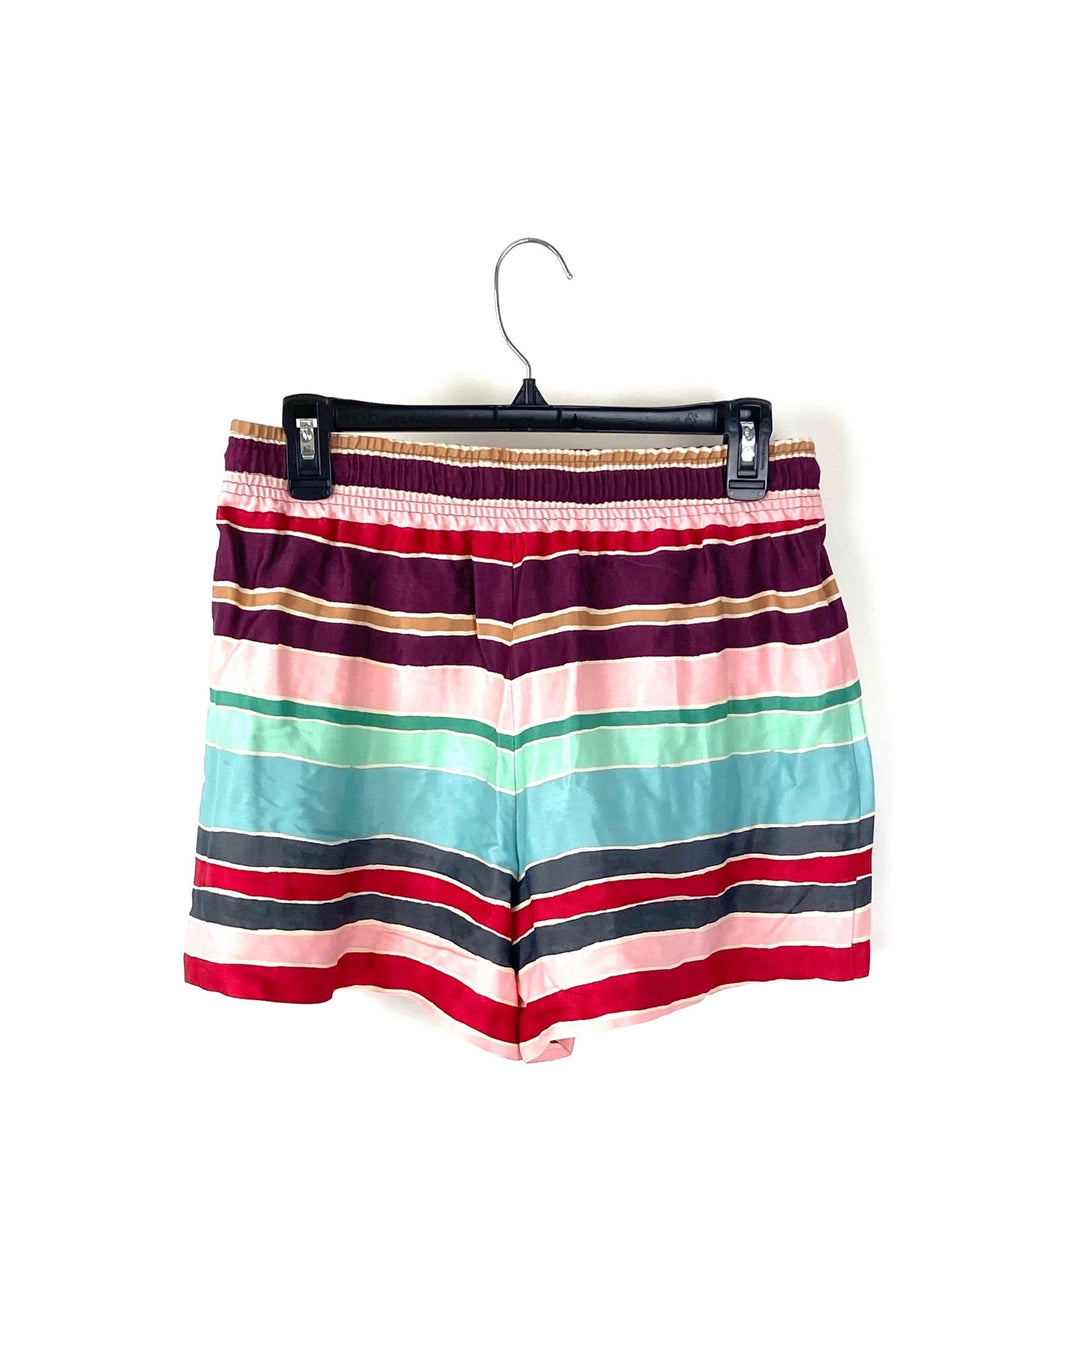 Multi-Colored Striped Shorts - Extra Small